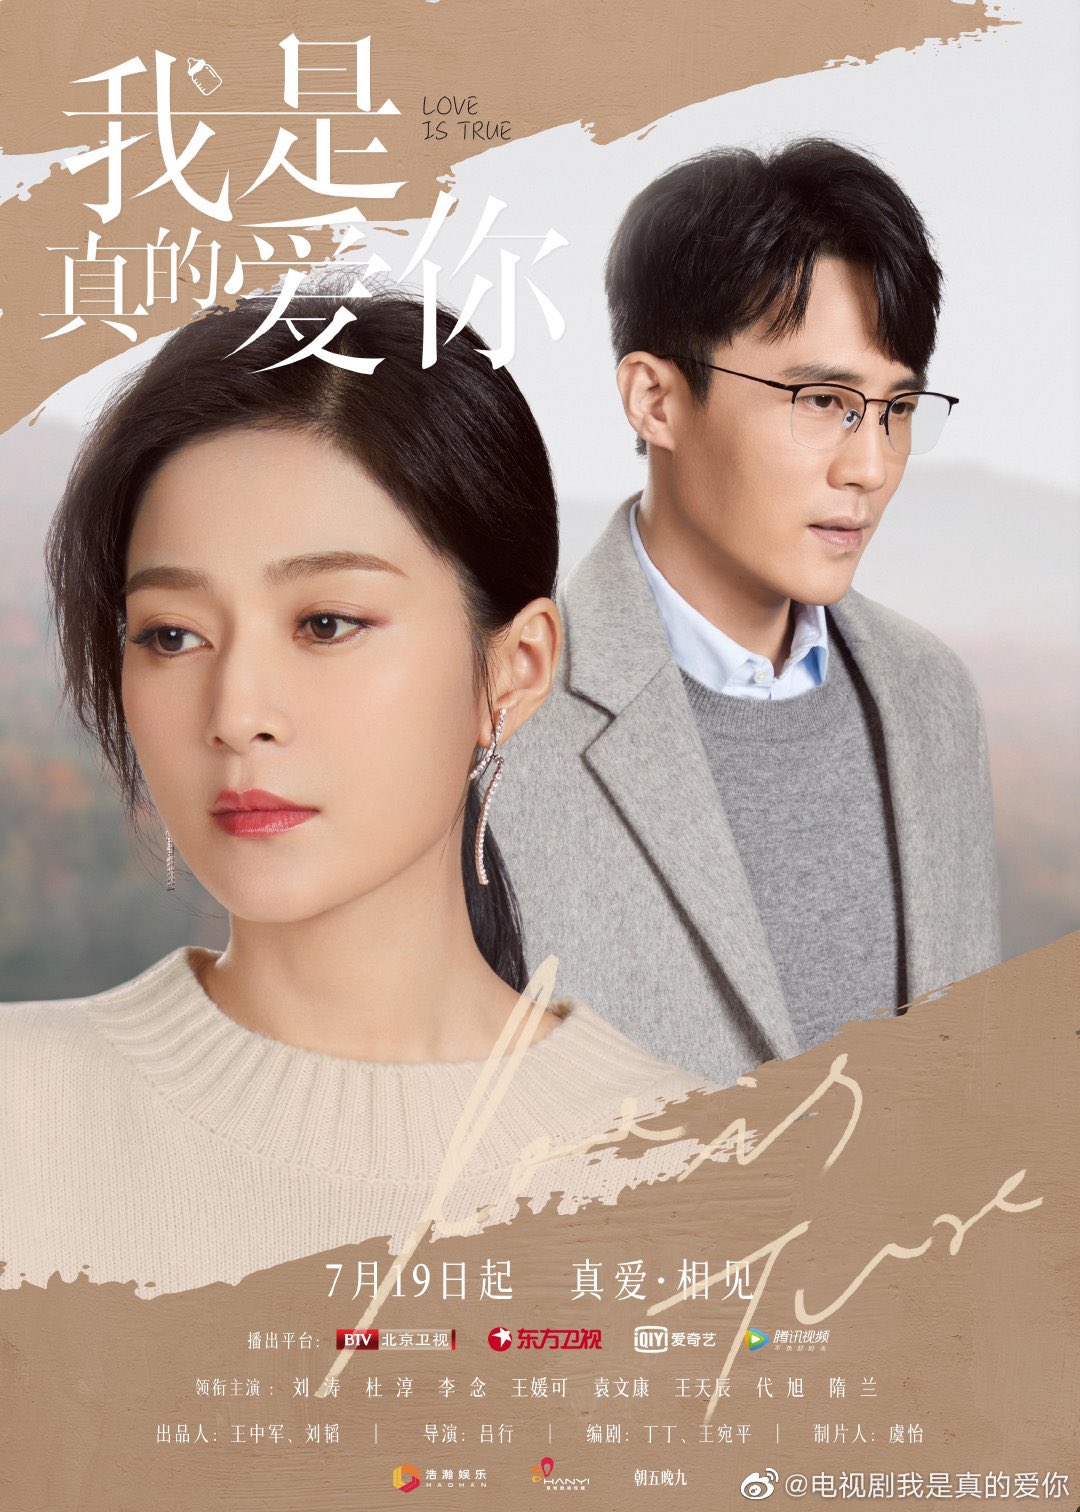 cdrama tweets on X: Female-centric drama #LoveIsTrue starting Liu